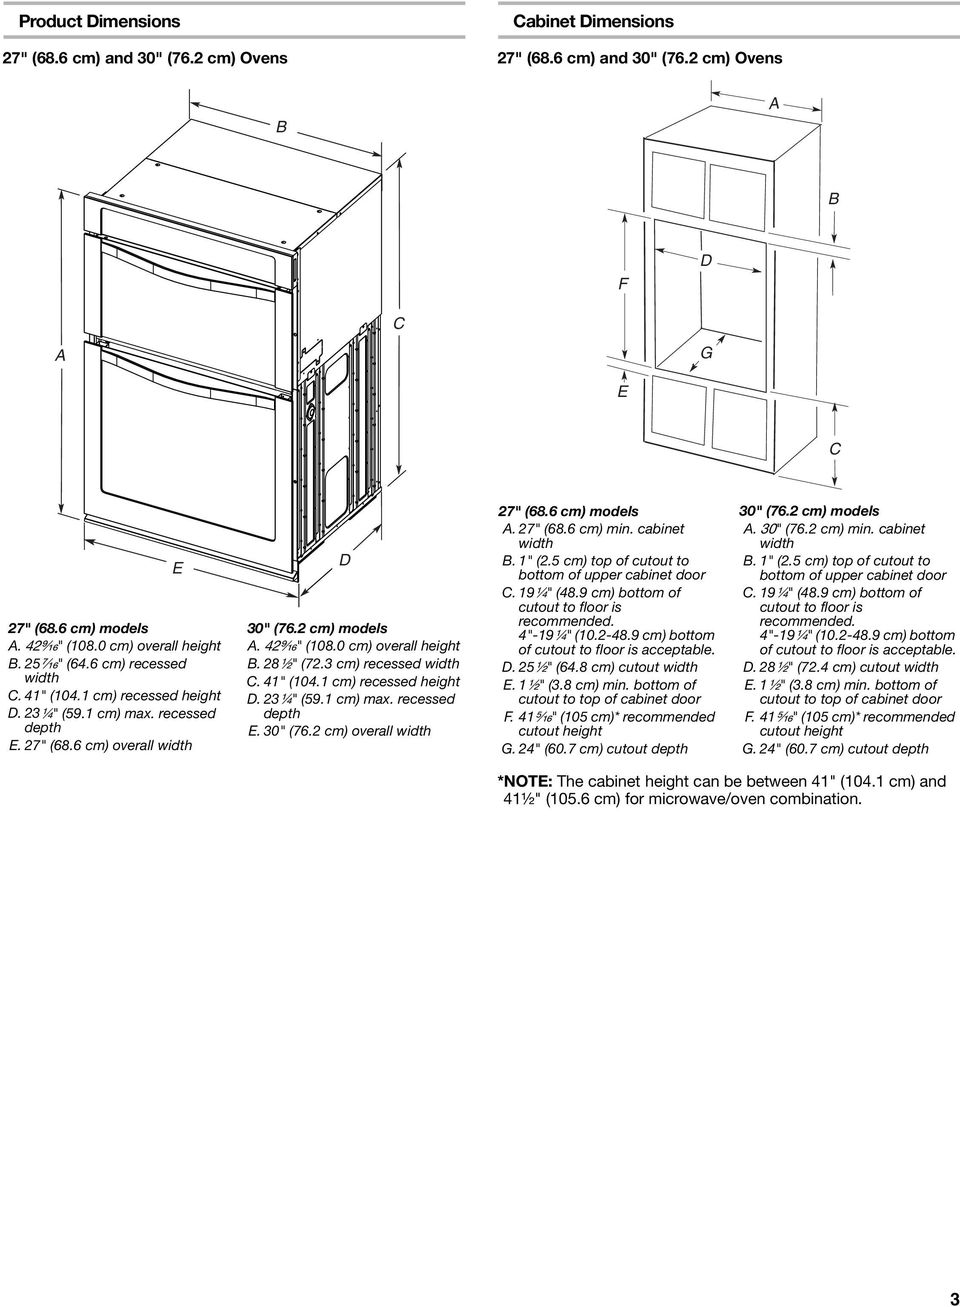 3 cm) recessed width. 41" (104.1 cm) recessed height. 23¹ ₄" (59.1 cm) max. recessed depth E. 30" (76.2 cm) overall width 27" (68.6 cm) models. 27" (68.6 cm) min. cabinet width. 1" (2.